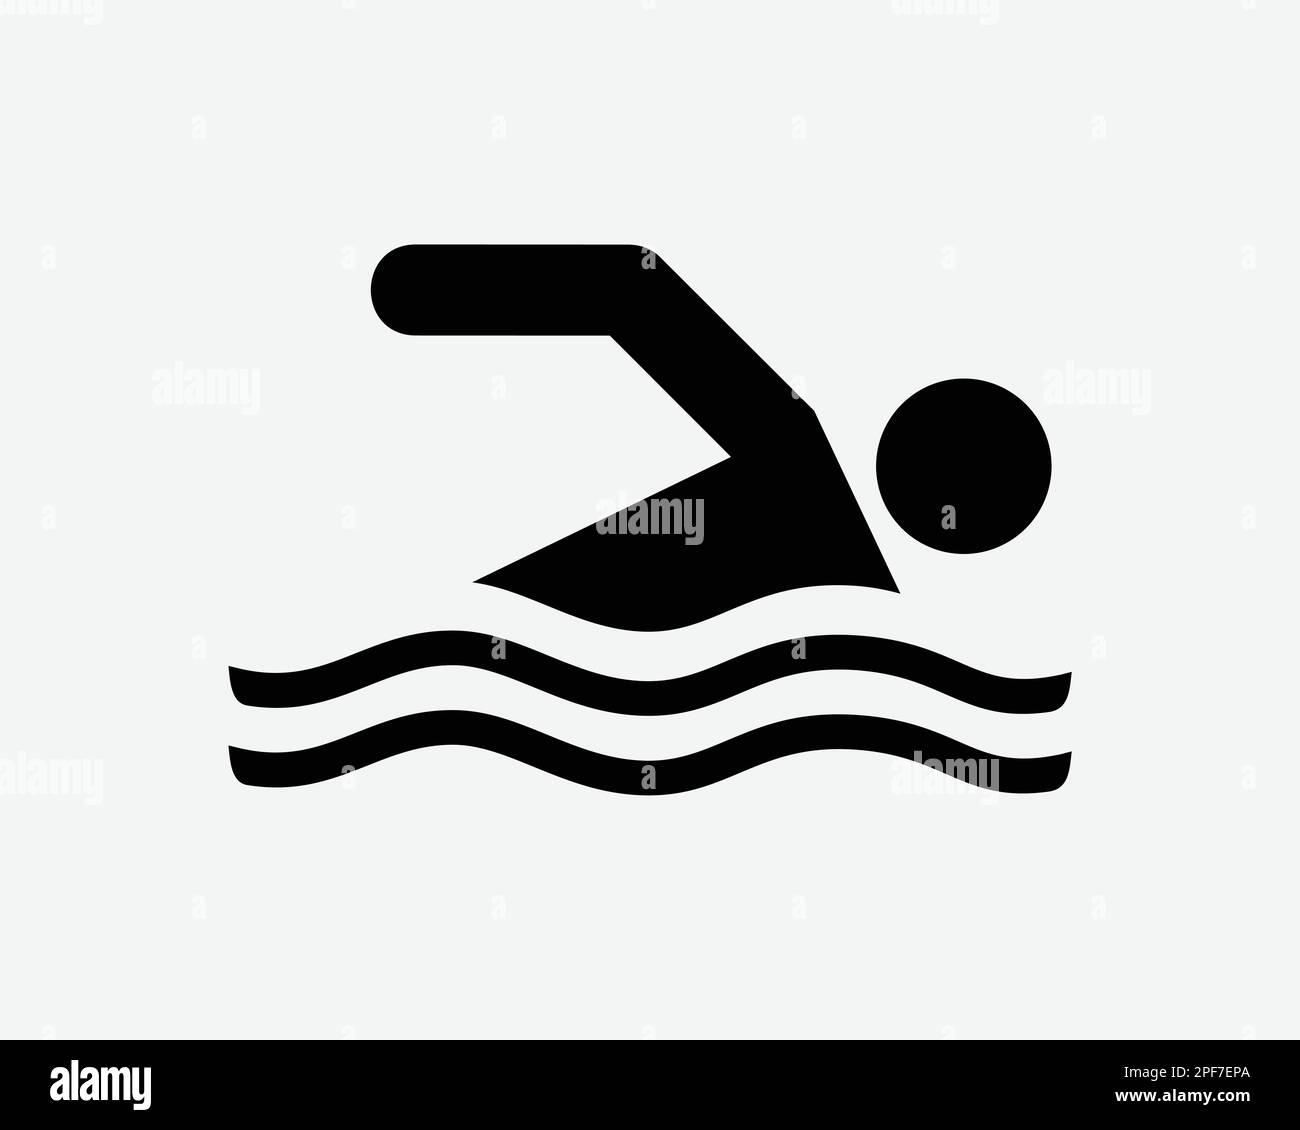 Swimming Icon Swim Swimmer Man Stick Figure Sport Athlete Vector Black White Silhouette Symbol Sign Graphic Clipart Artwork Illustration Pictogram Stock Vector